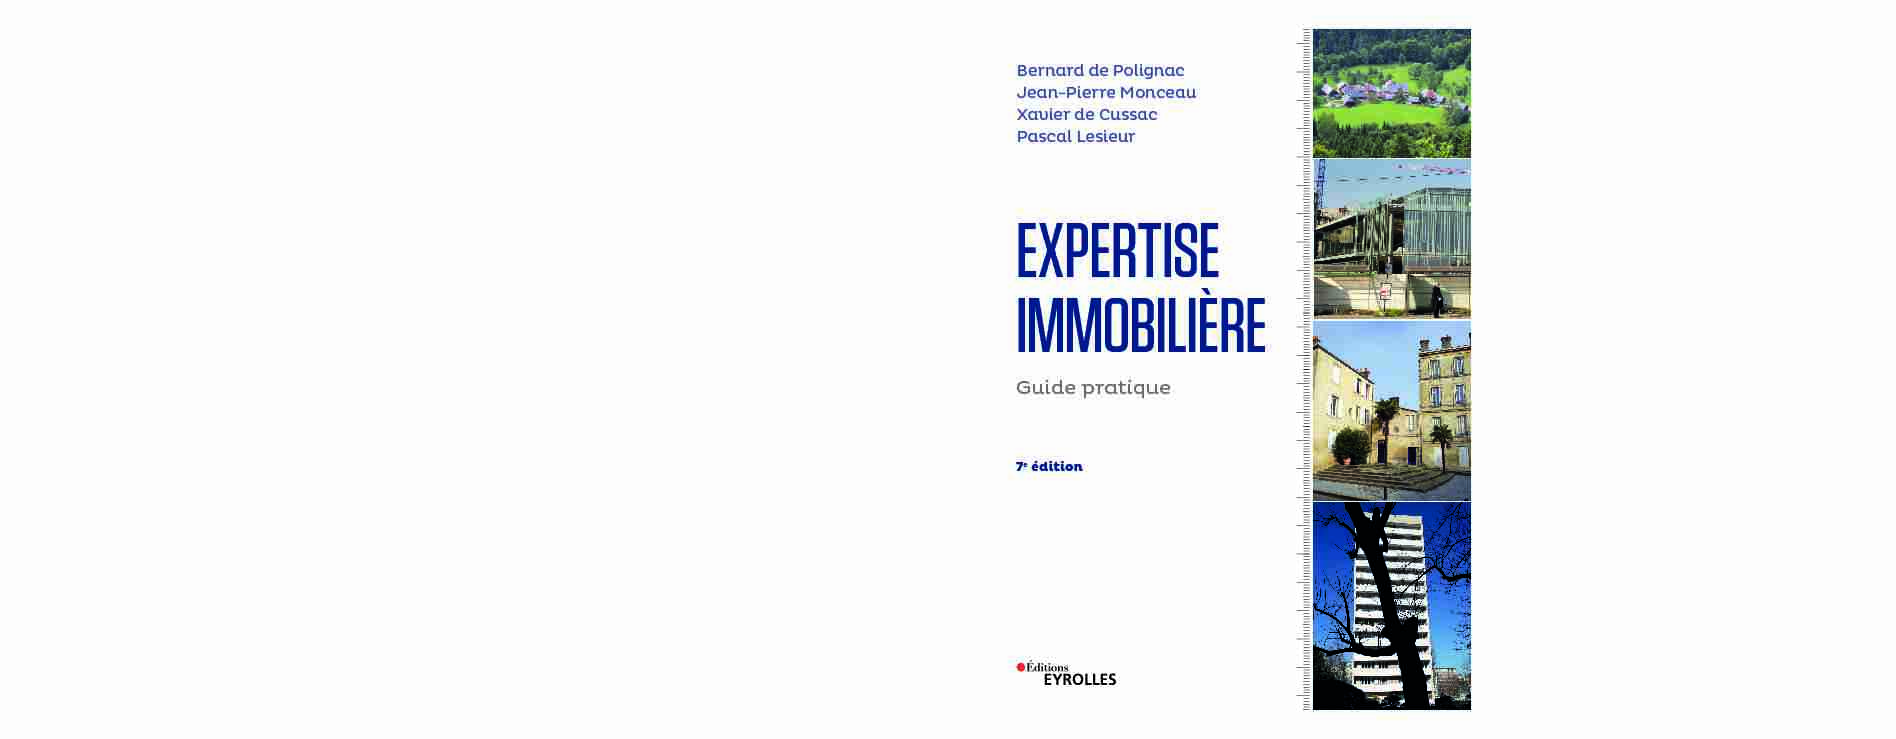 [PDF] EXPERTISE ImmobIlIèRE - Numilog